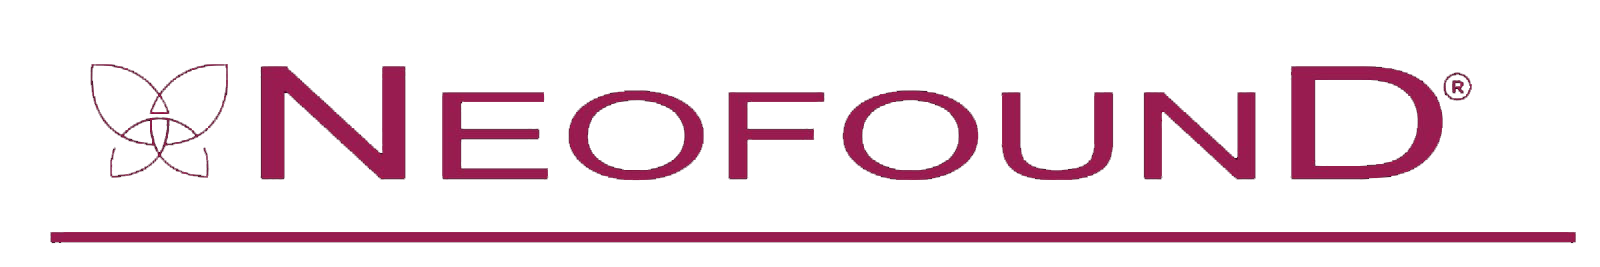 Neofound logo